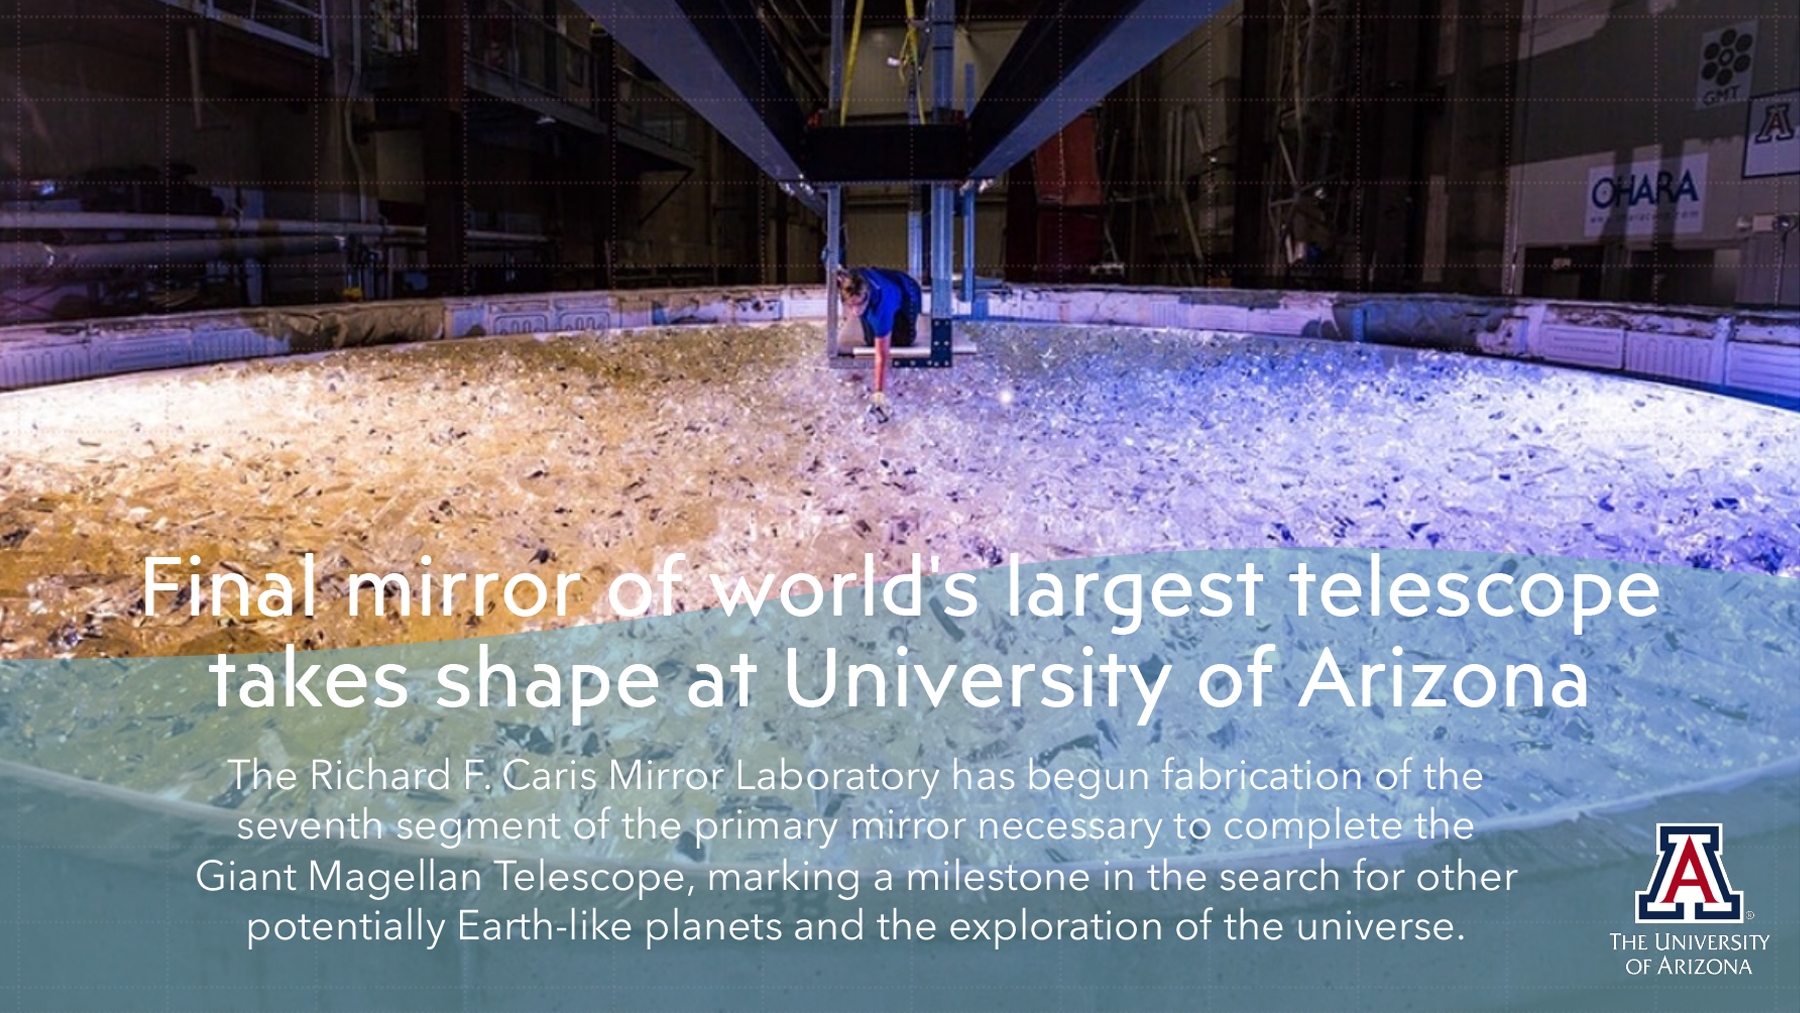 Final mirror of world's largest telescope takes shape at University of Arizona